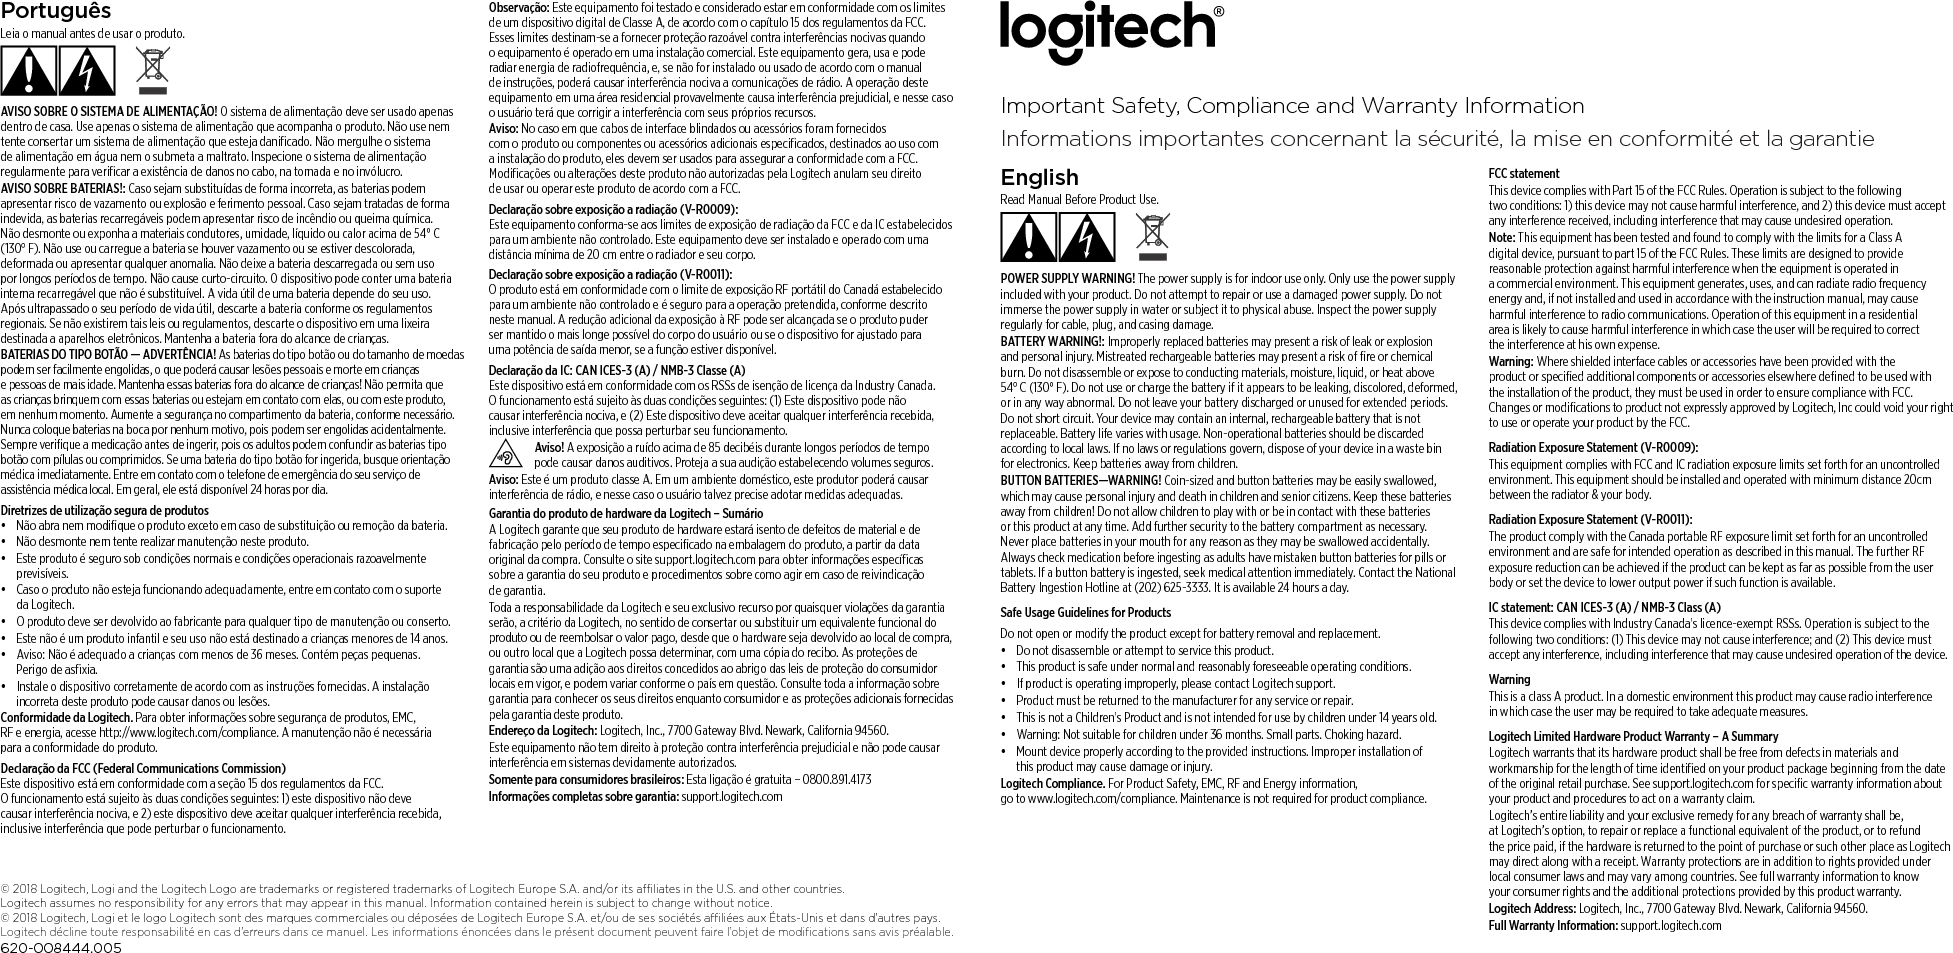 Logitech Far East Vr0011 Remote User Manual Statement Rev